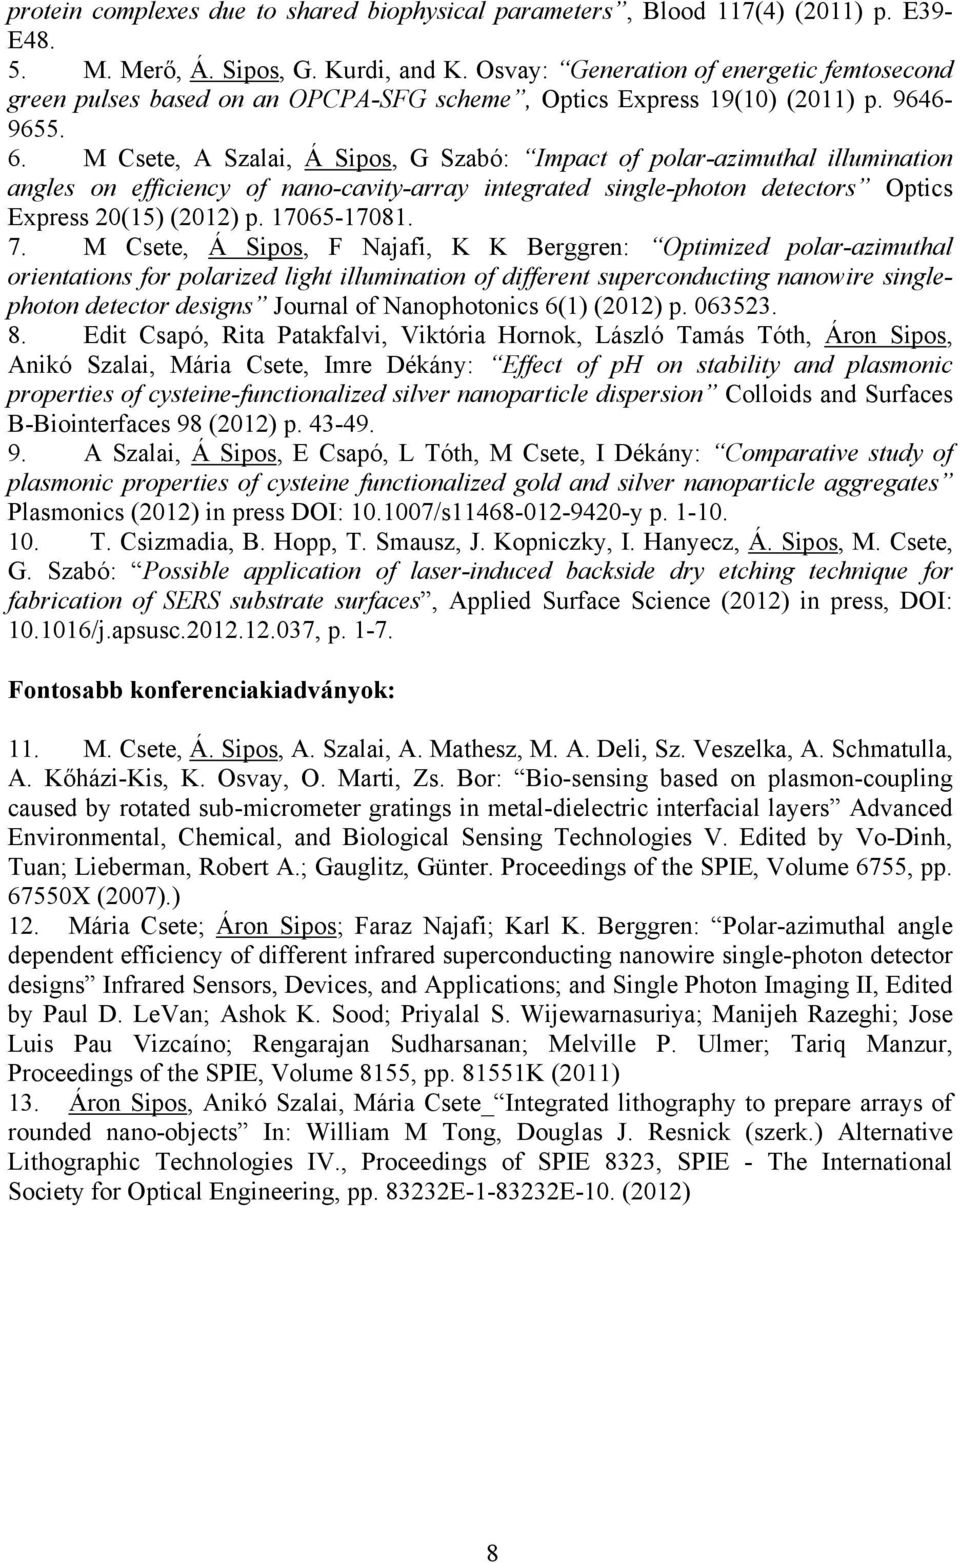 M Csete, A Szalai, Á Sipos, G Szabó: Impact of polar-azimuthal illumination angles on efficiency of nano-cavity-array integrated single-photon detectors Optics Express 20(15) (2012) p. 17065-17081. 7.